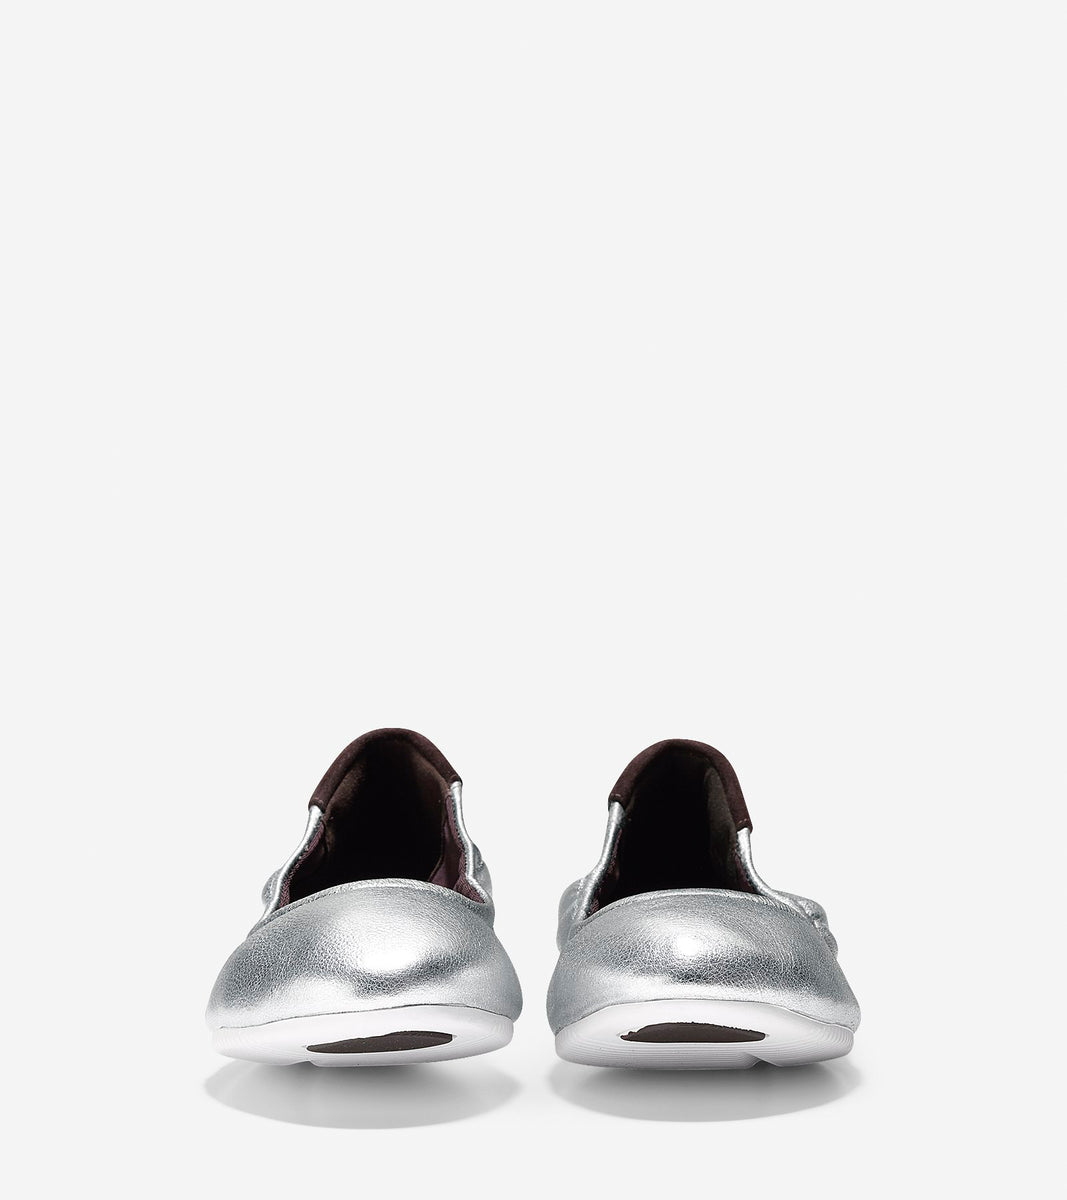 ColeHaan-StudiøGrand Packable Ballet Flat-w08231-Ch Argento Metallic Suede-white